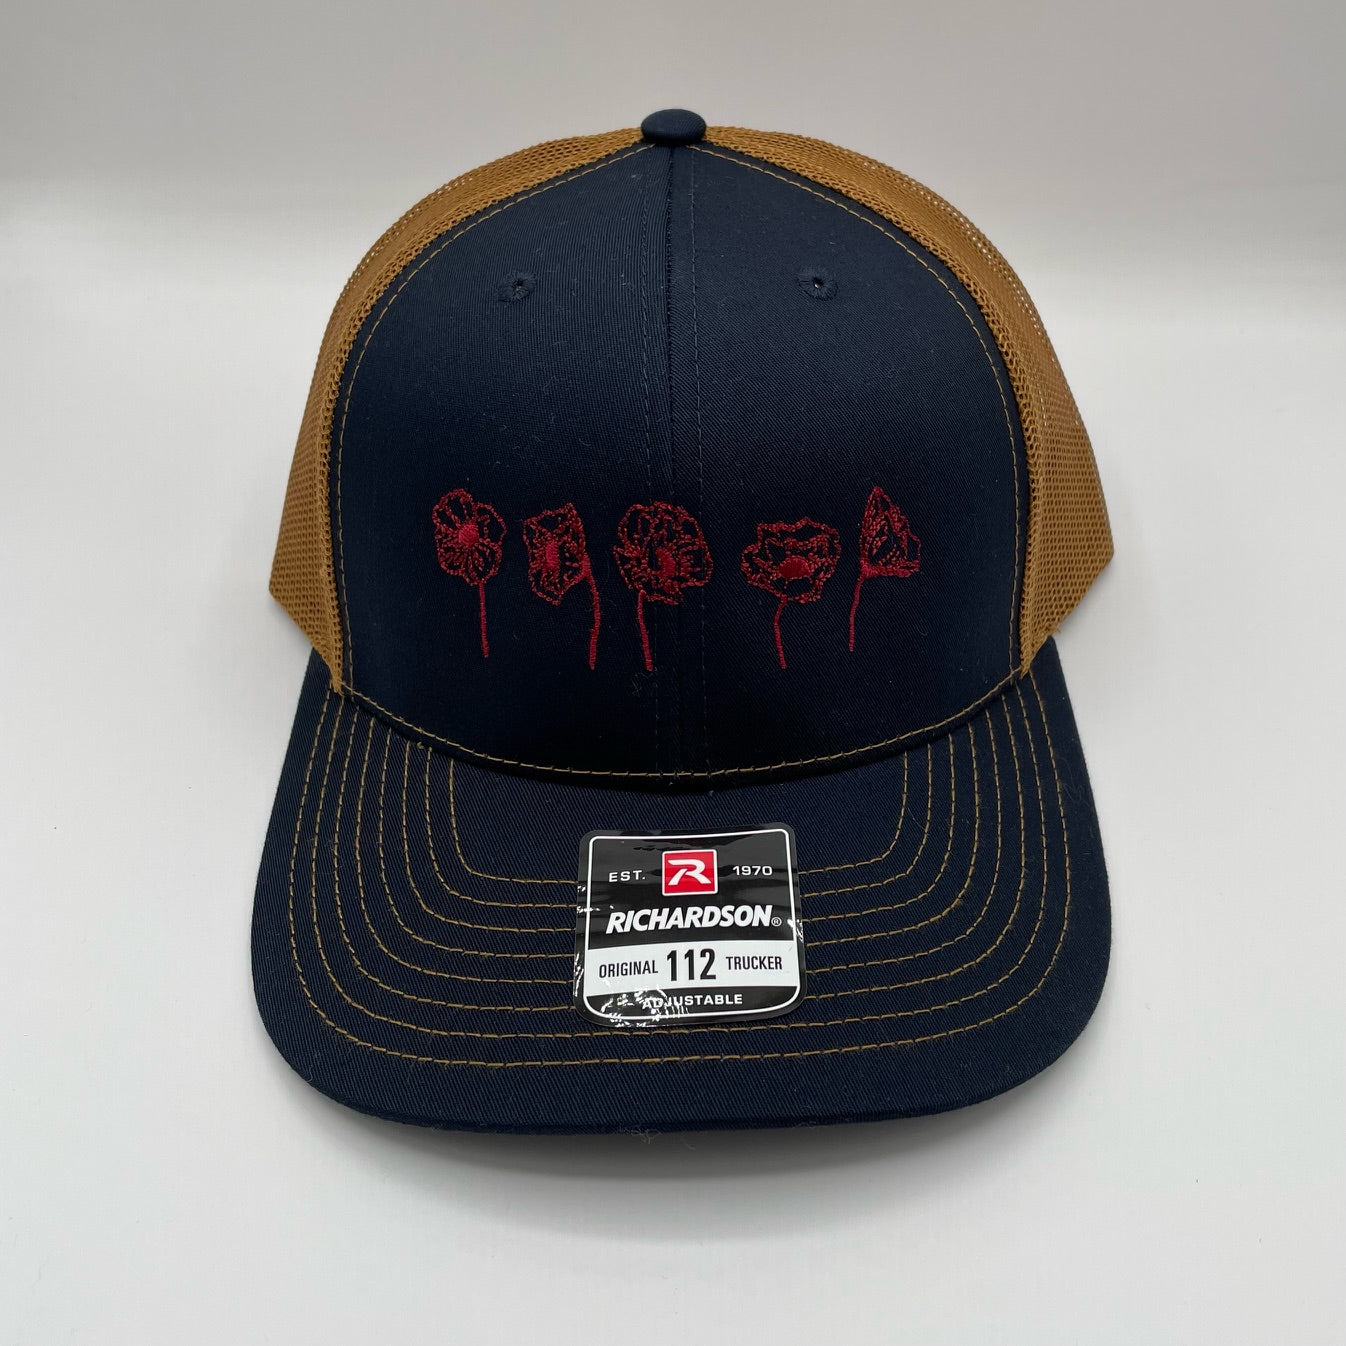 Blue SnapBack Trucker Hat - Savage Strike Spinners Merchandise